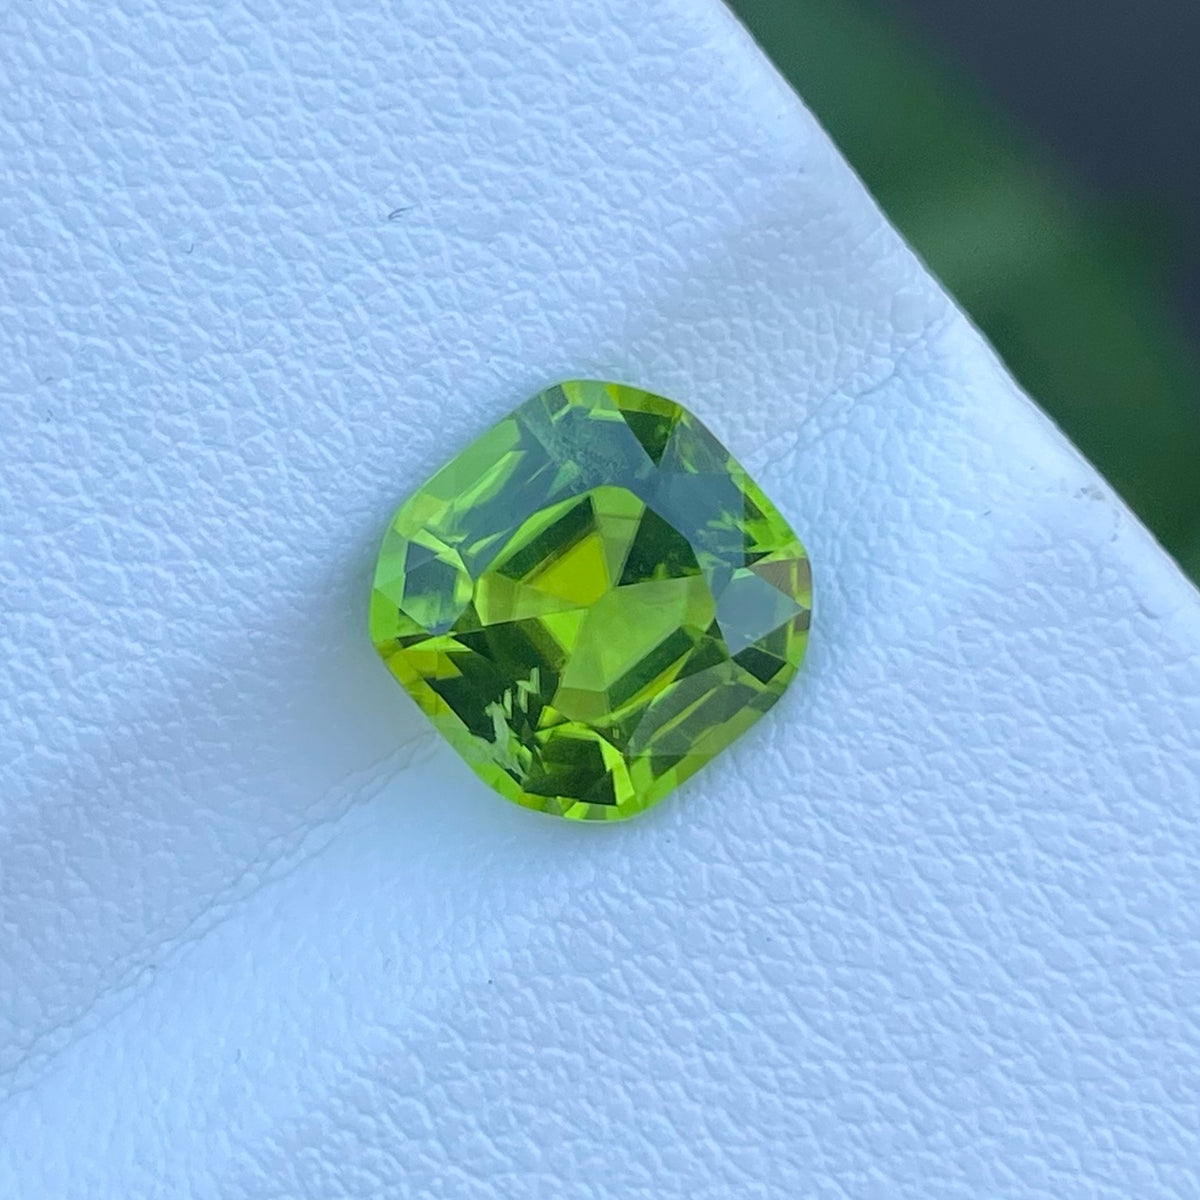 Gorgeous Natural Green Peridot Gemstone